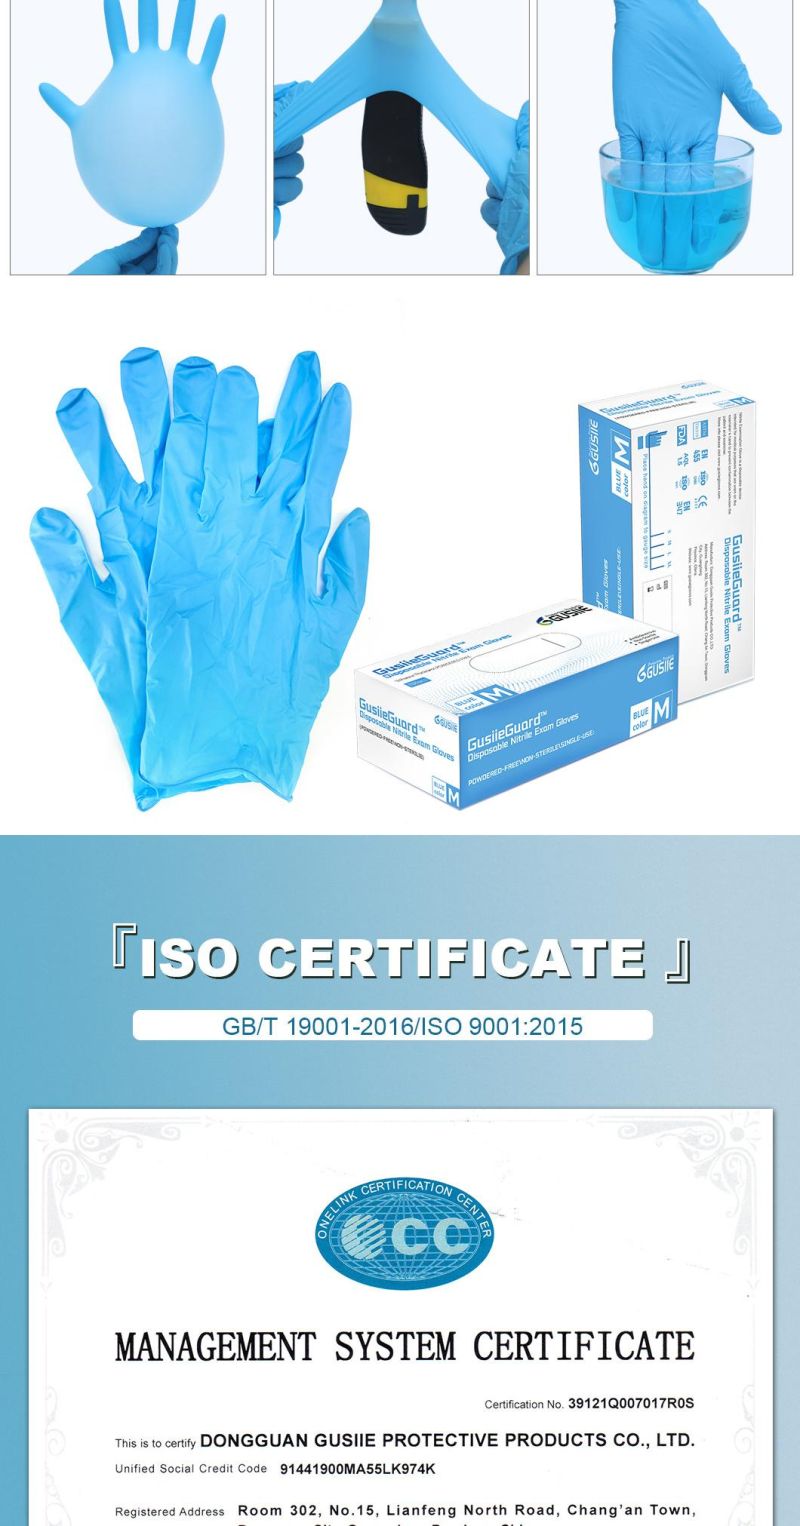 Disposable Nitrile Examination Gloves - Medical Grade and Industrial Grade